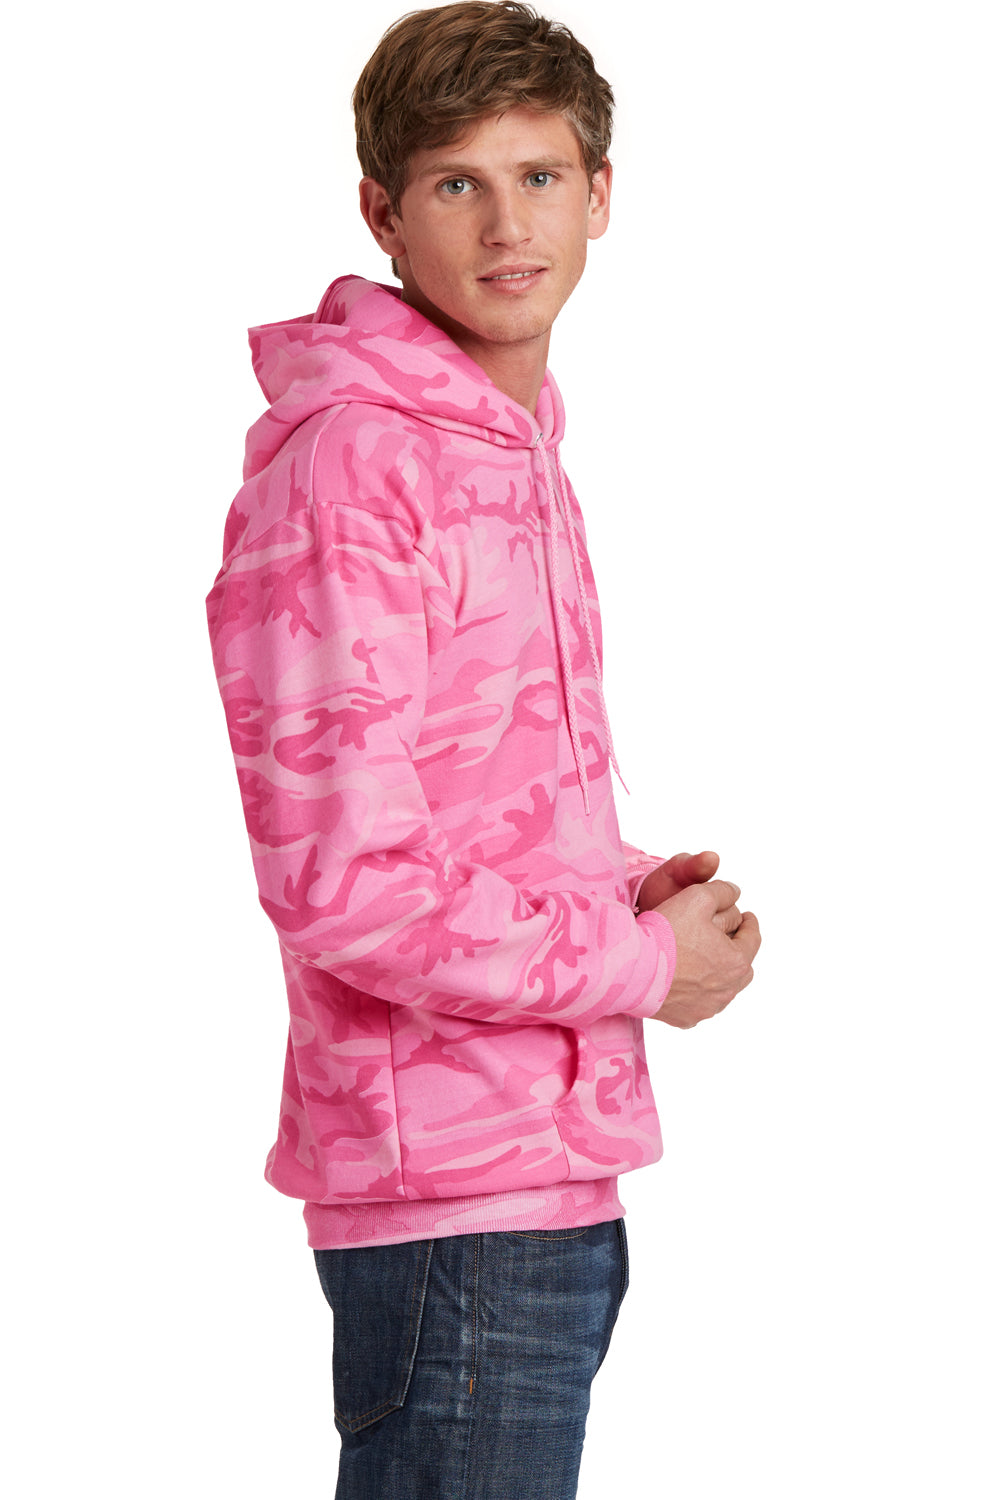 Port & Company PC78HC Mens Core Fleece Hooded Sweatshirt Hoodie Pink Camo Side